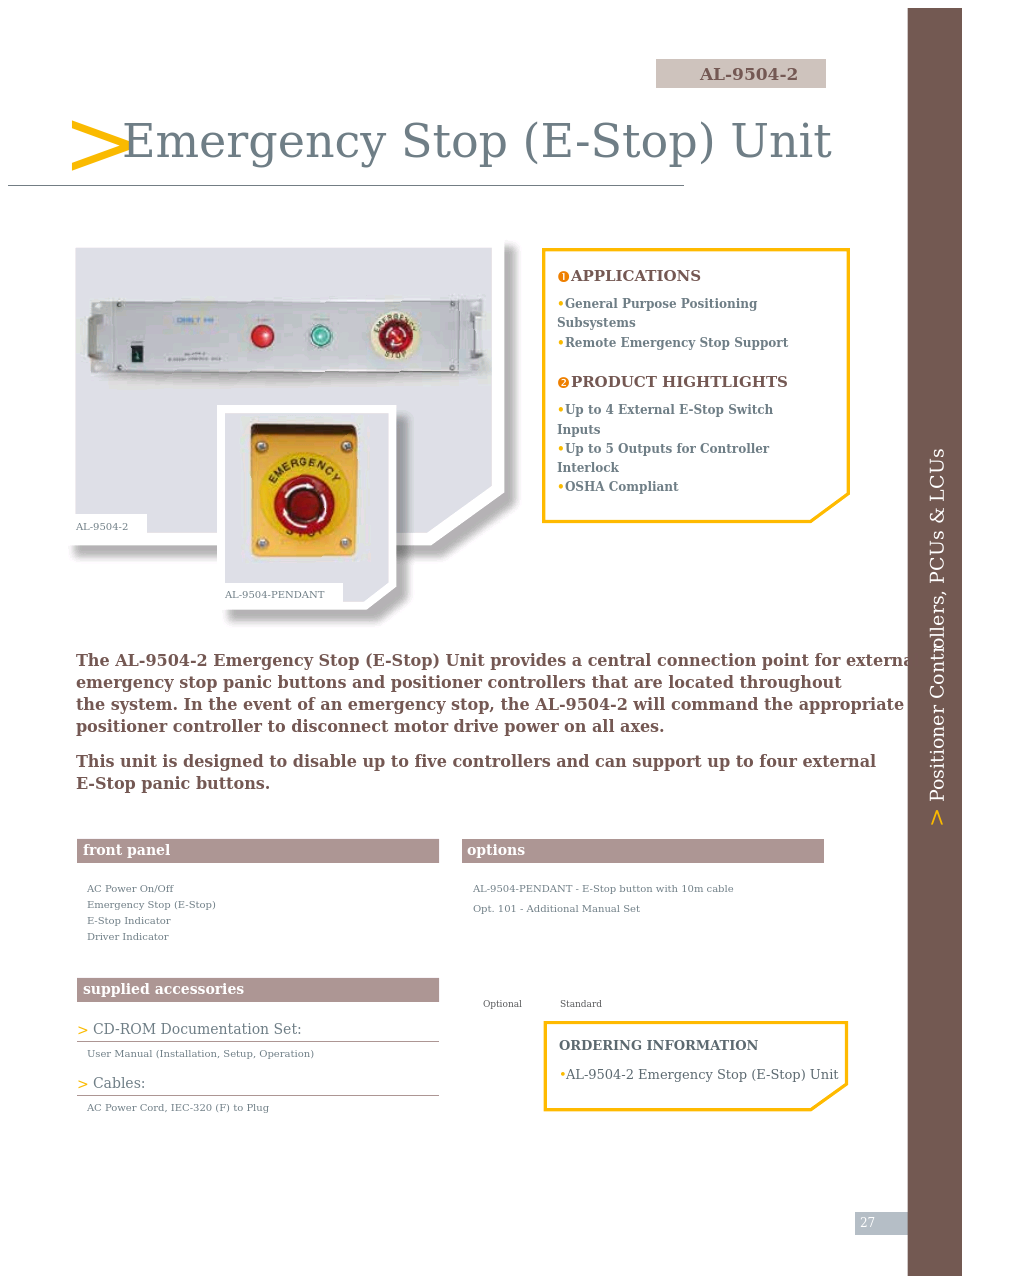 Emergency Stop Unit (E-Stop): AL-9504-2